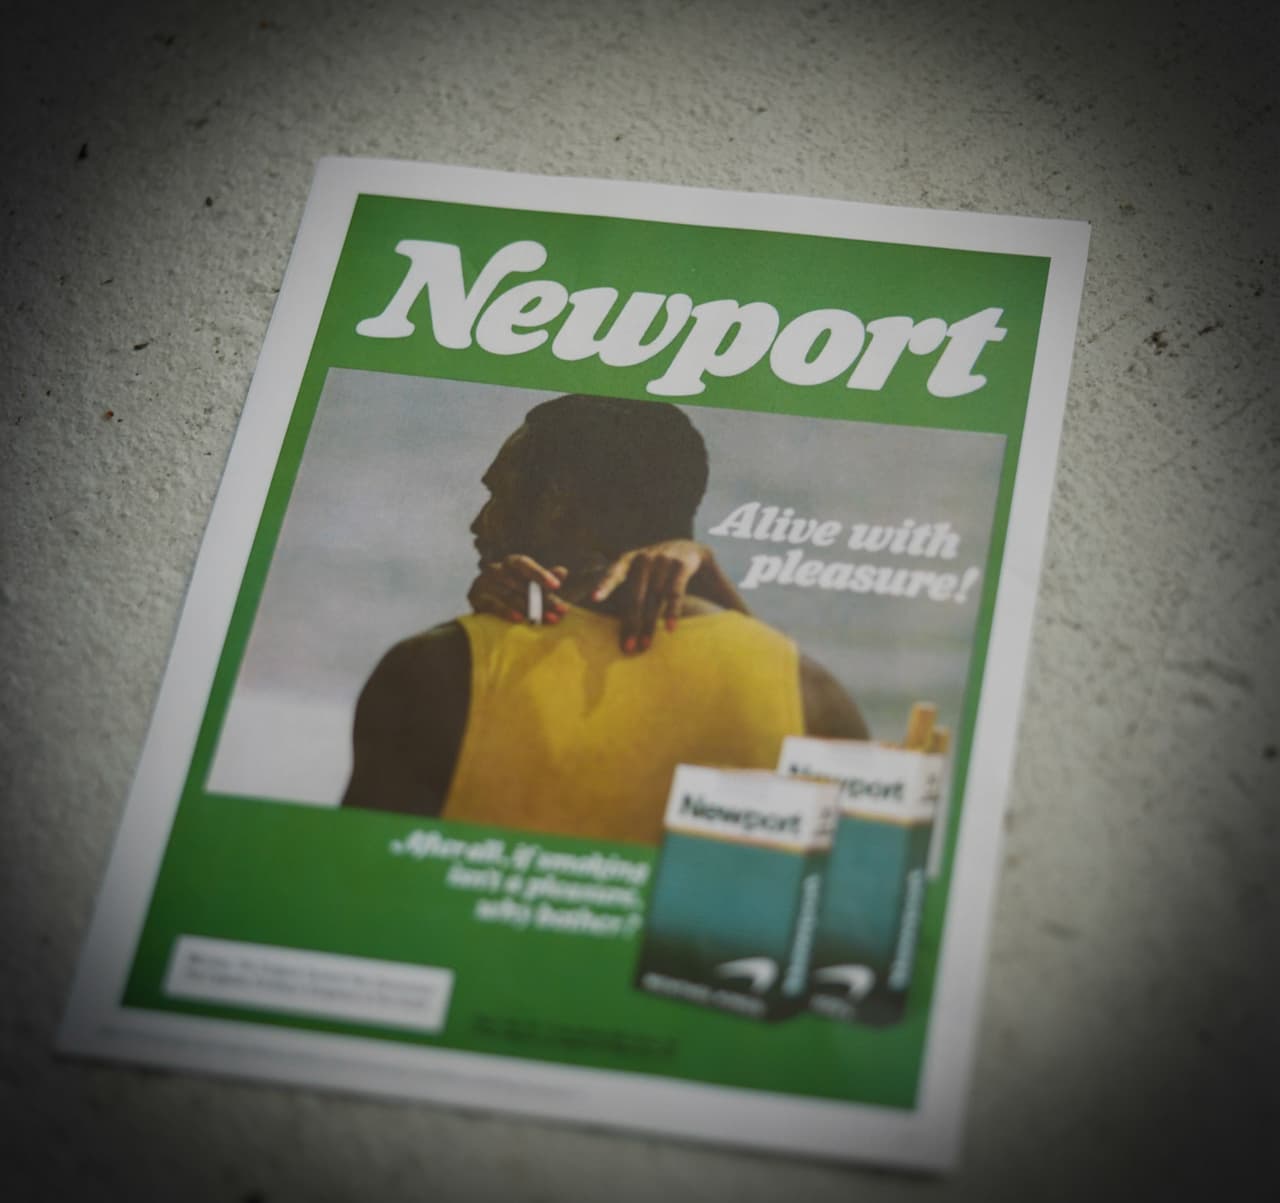 Newport advertisement